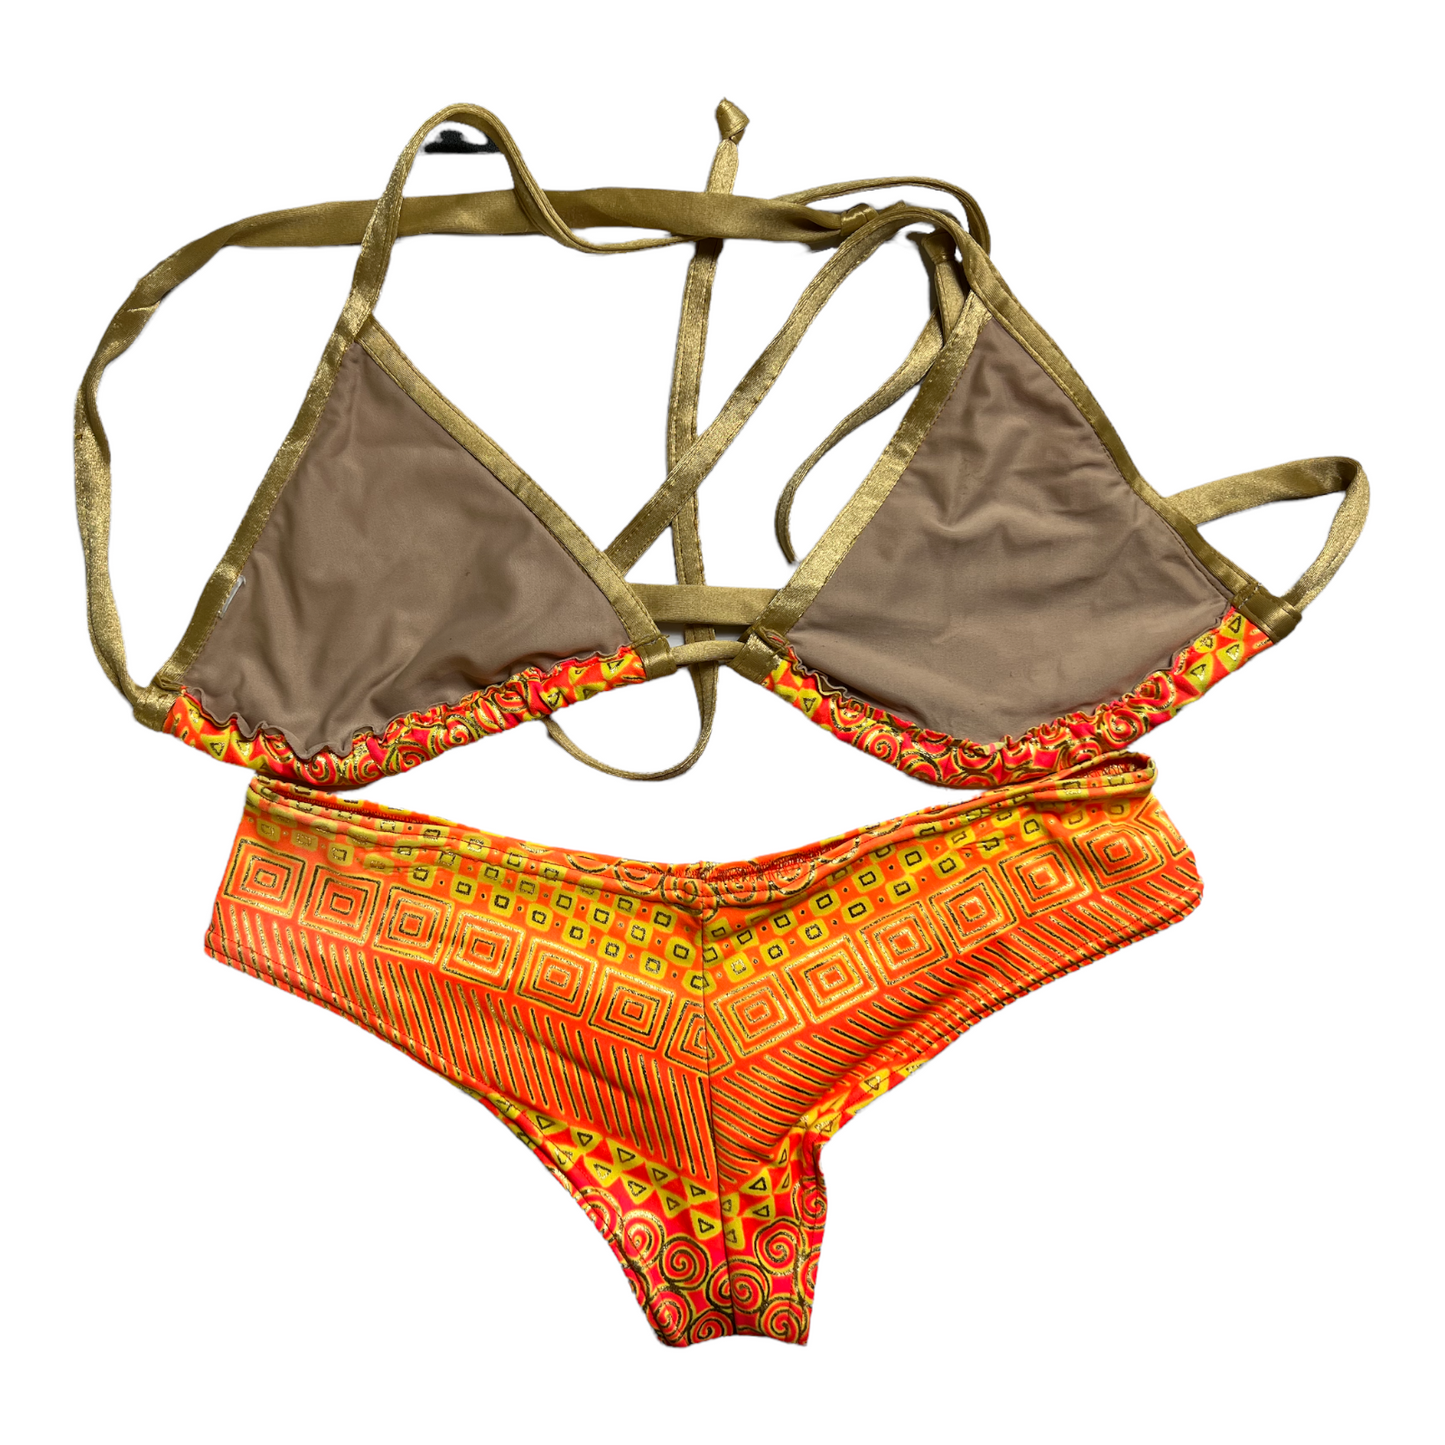 New Extreme Gear Thong/String Bikini Top, Swimwear Orange/Gold Sz M